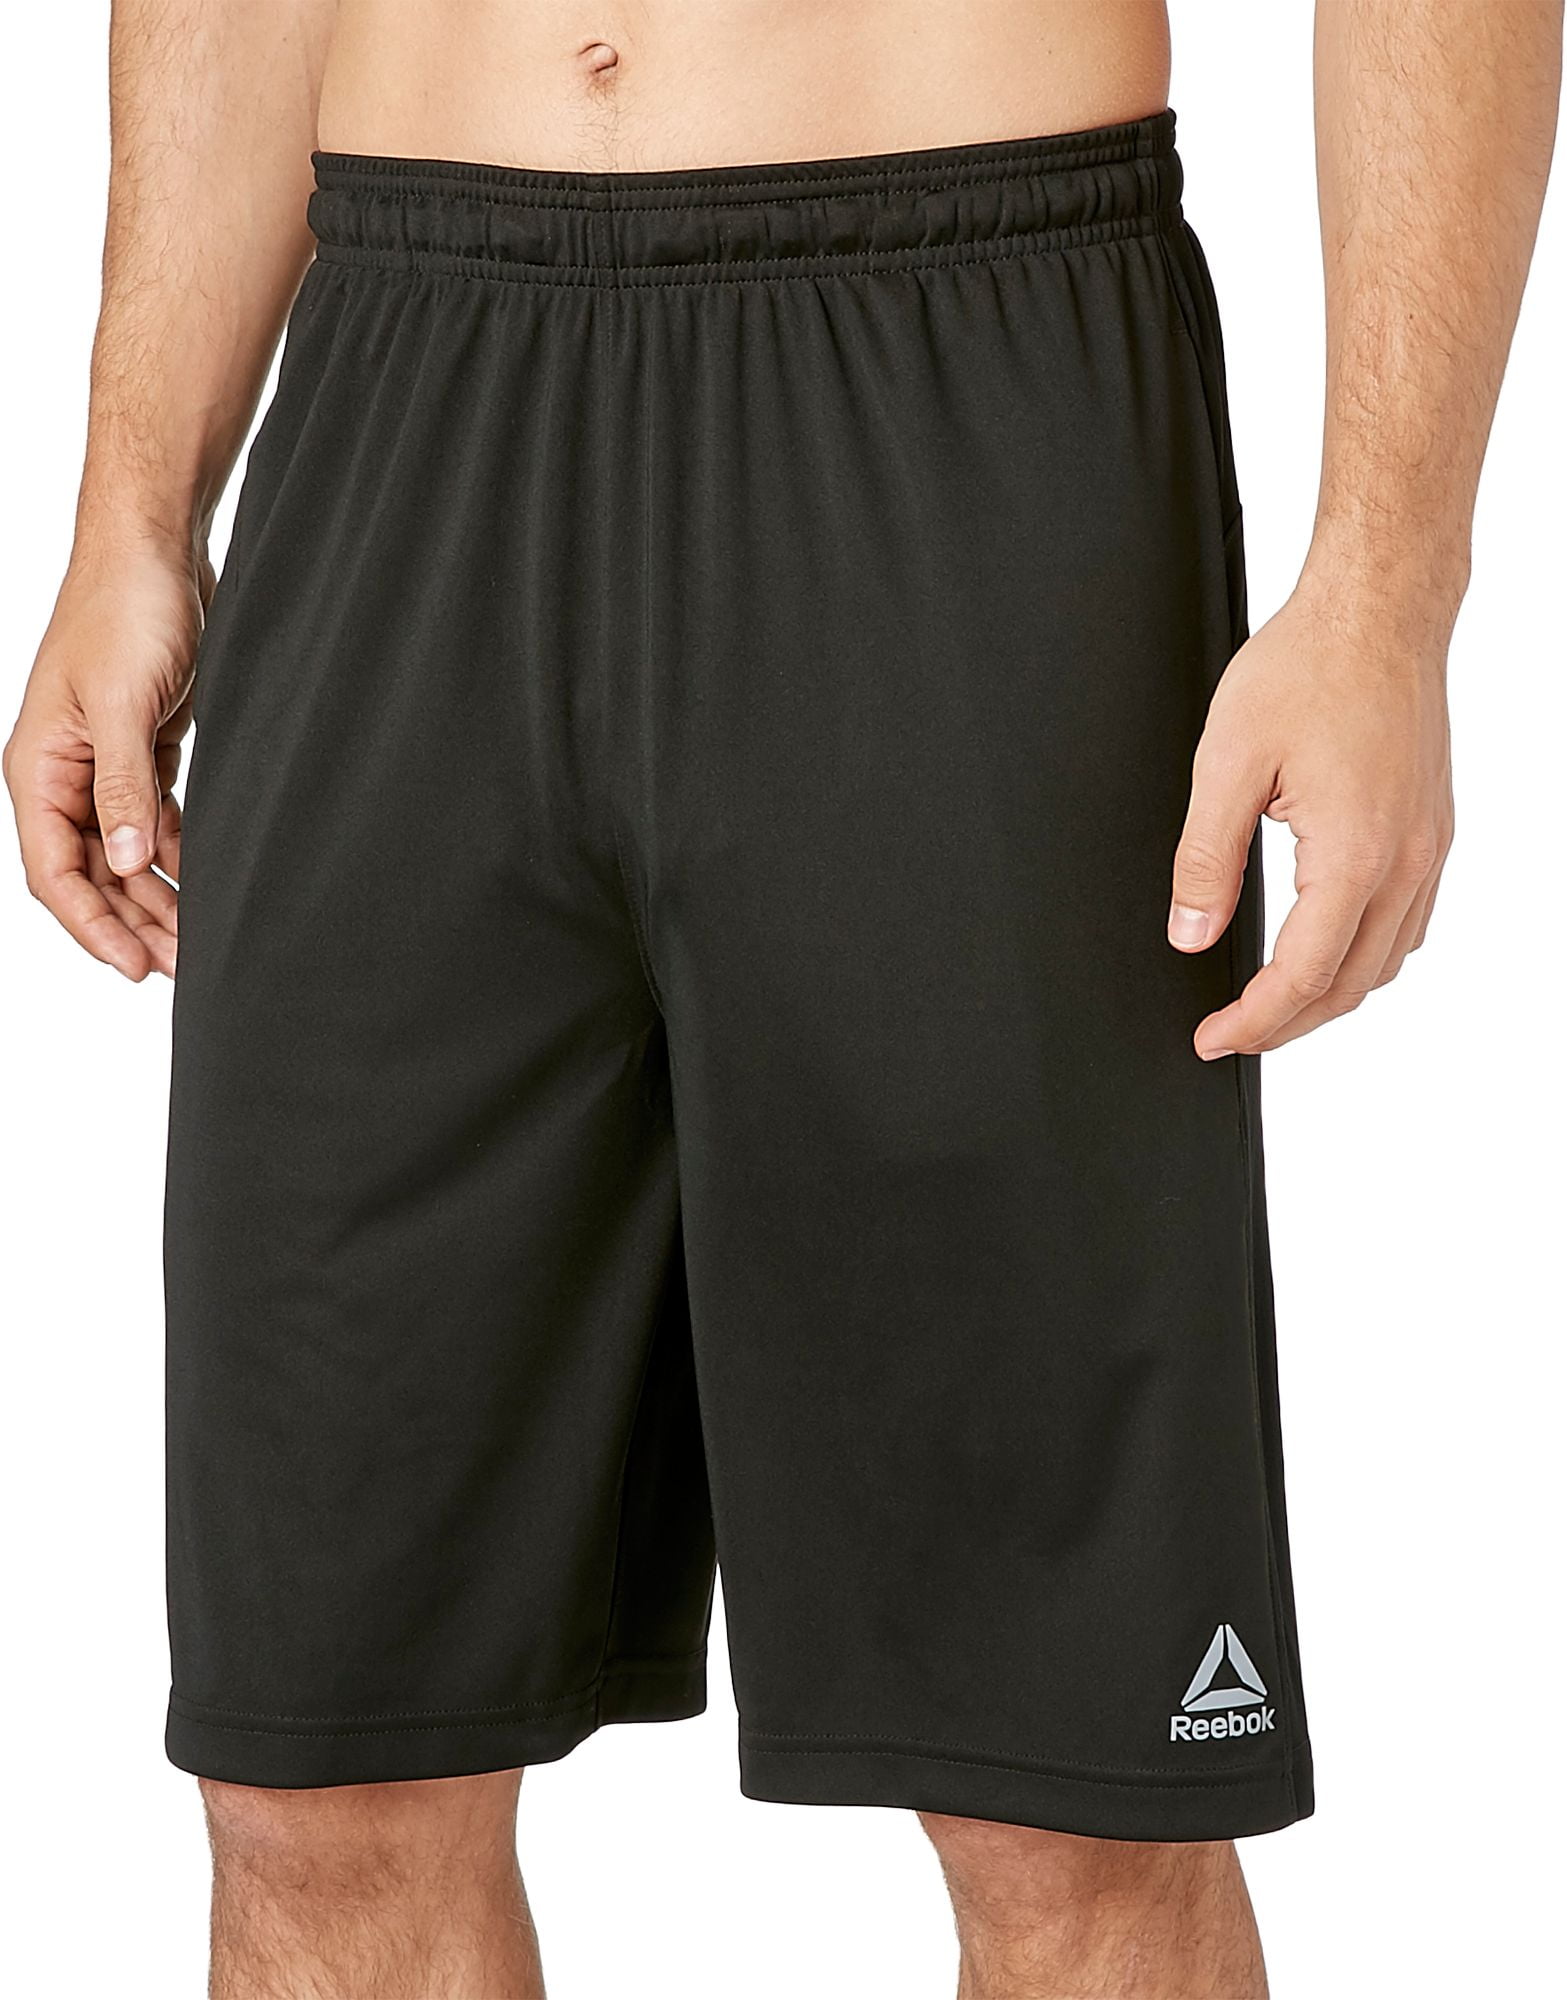 reebok men's solid performance shorts